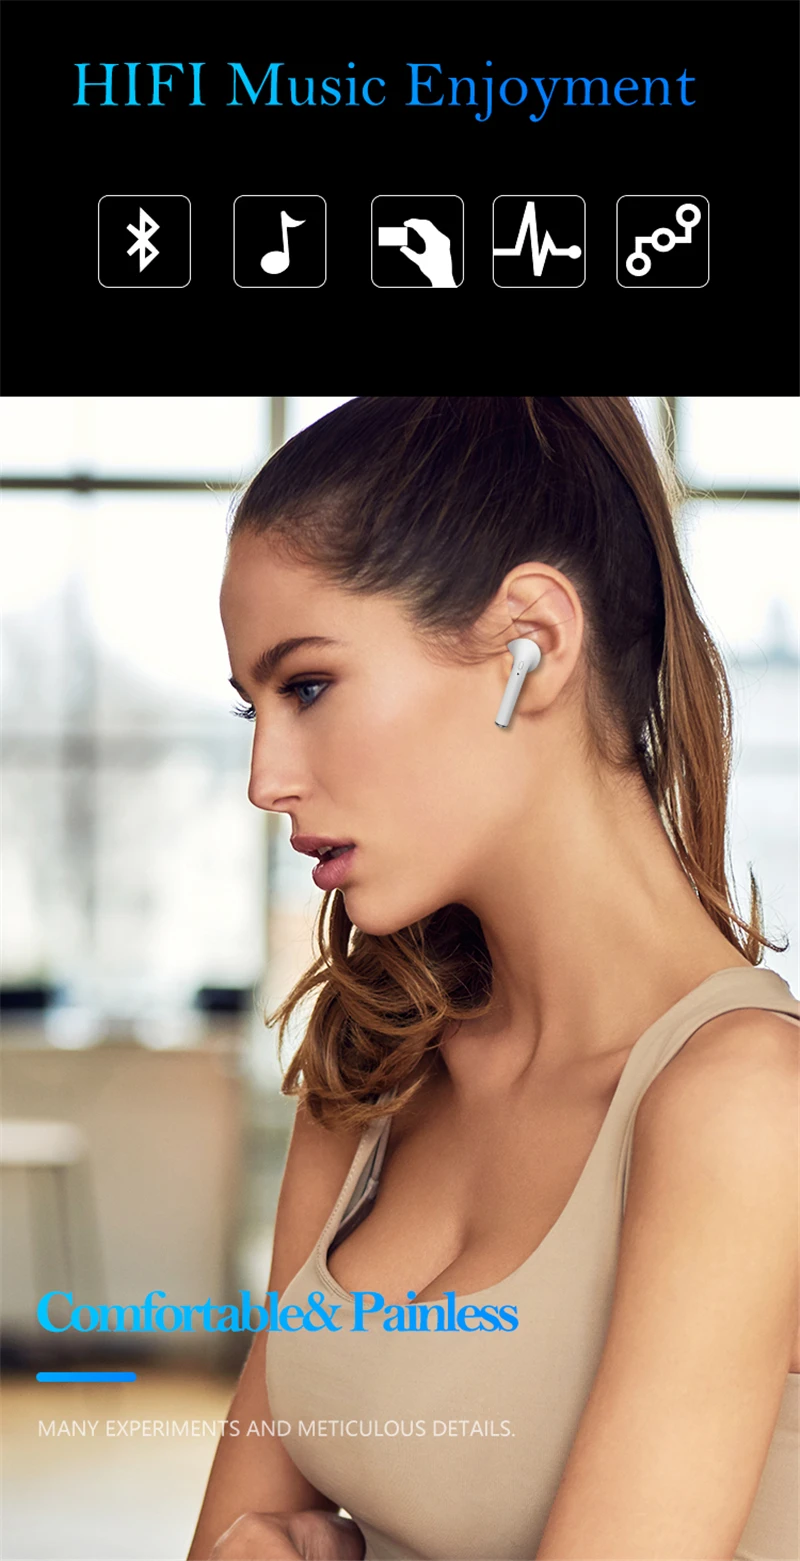 TWS i7s Wireless Headset Bluetooth Earphones Waterproof Music Headphones Sports Earbuds Business Headset Work on all Smartphones